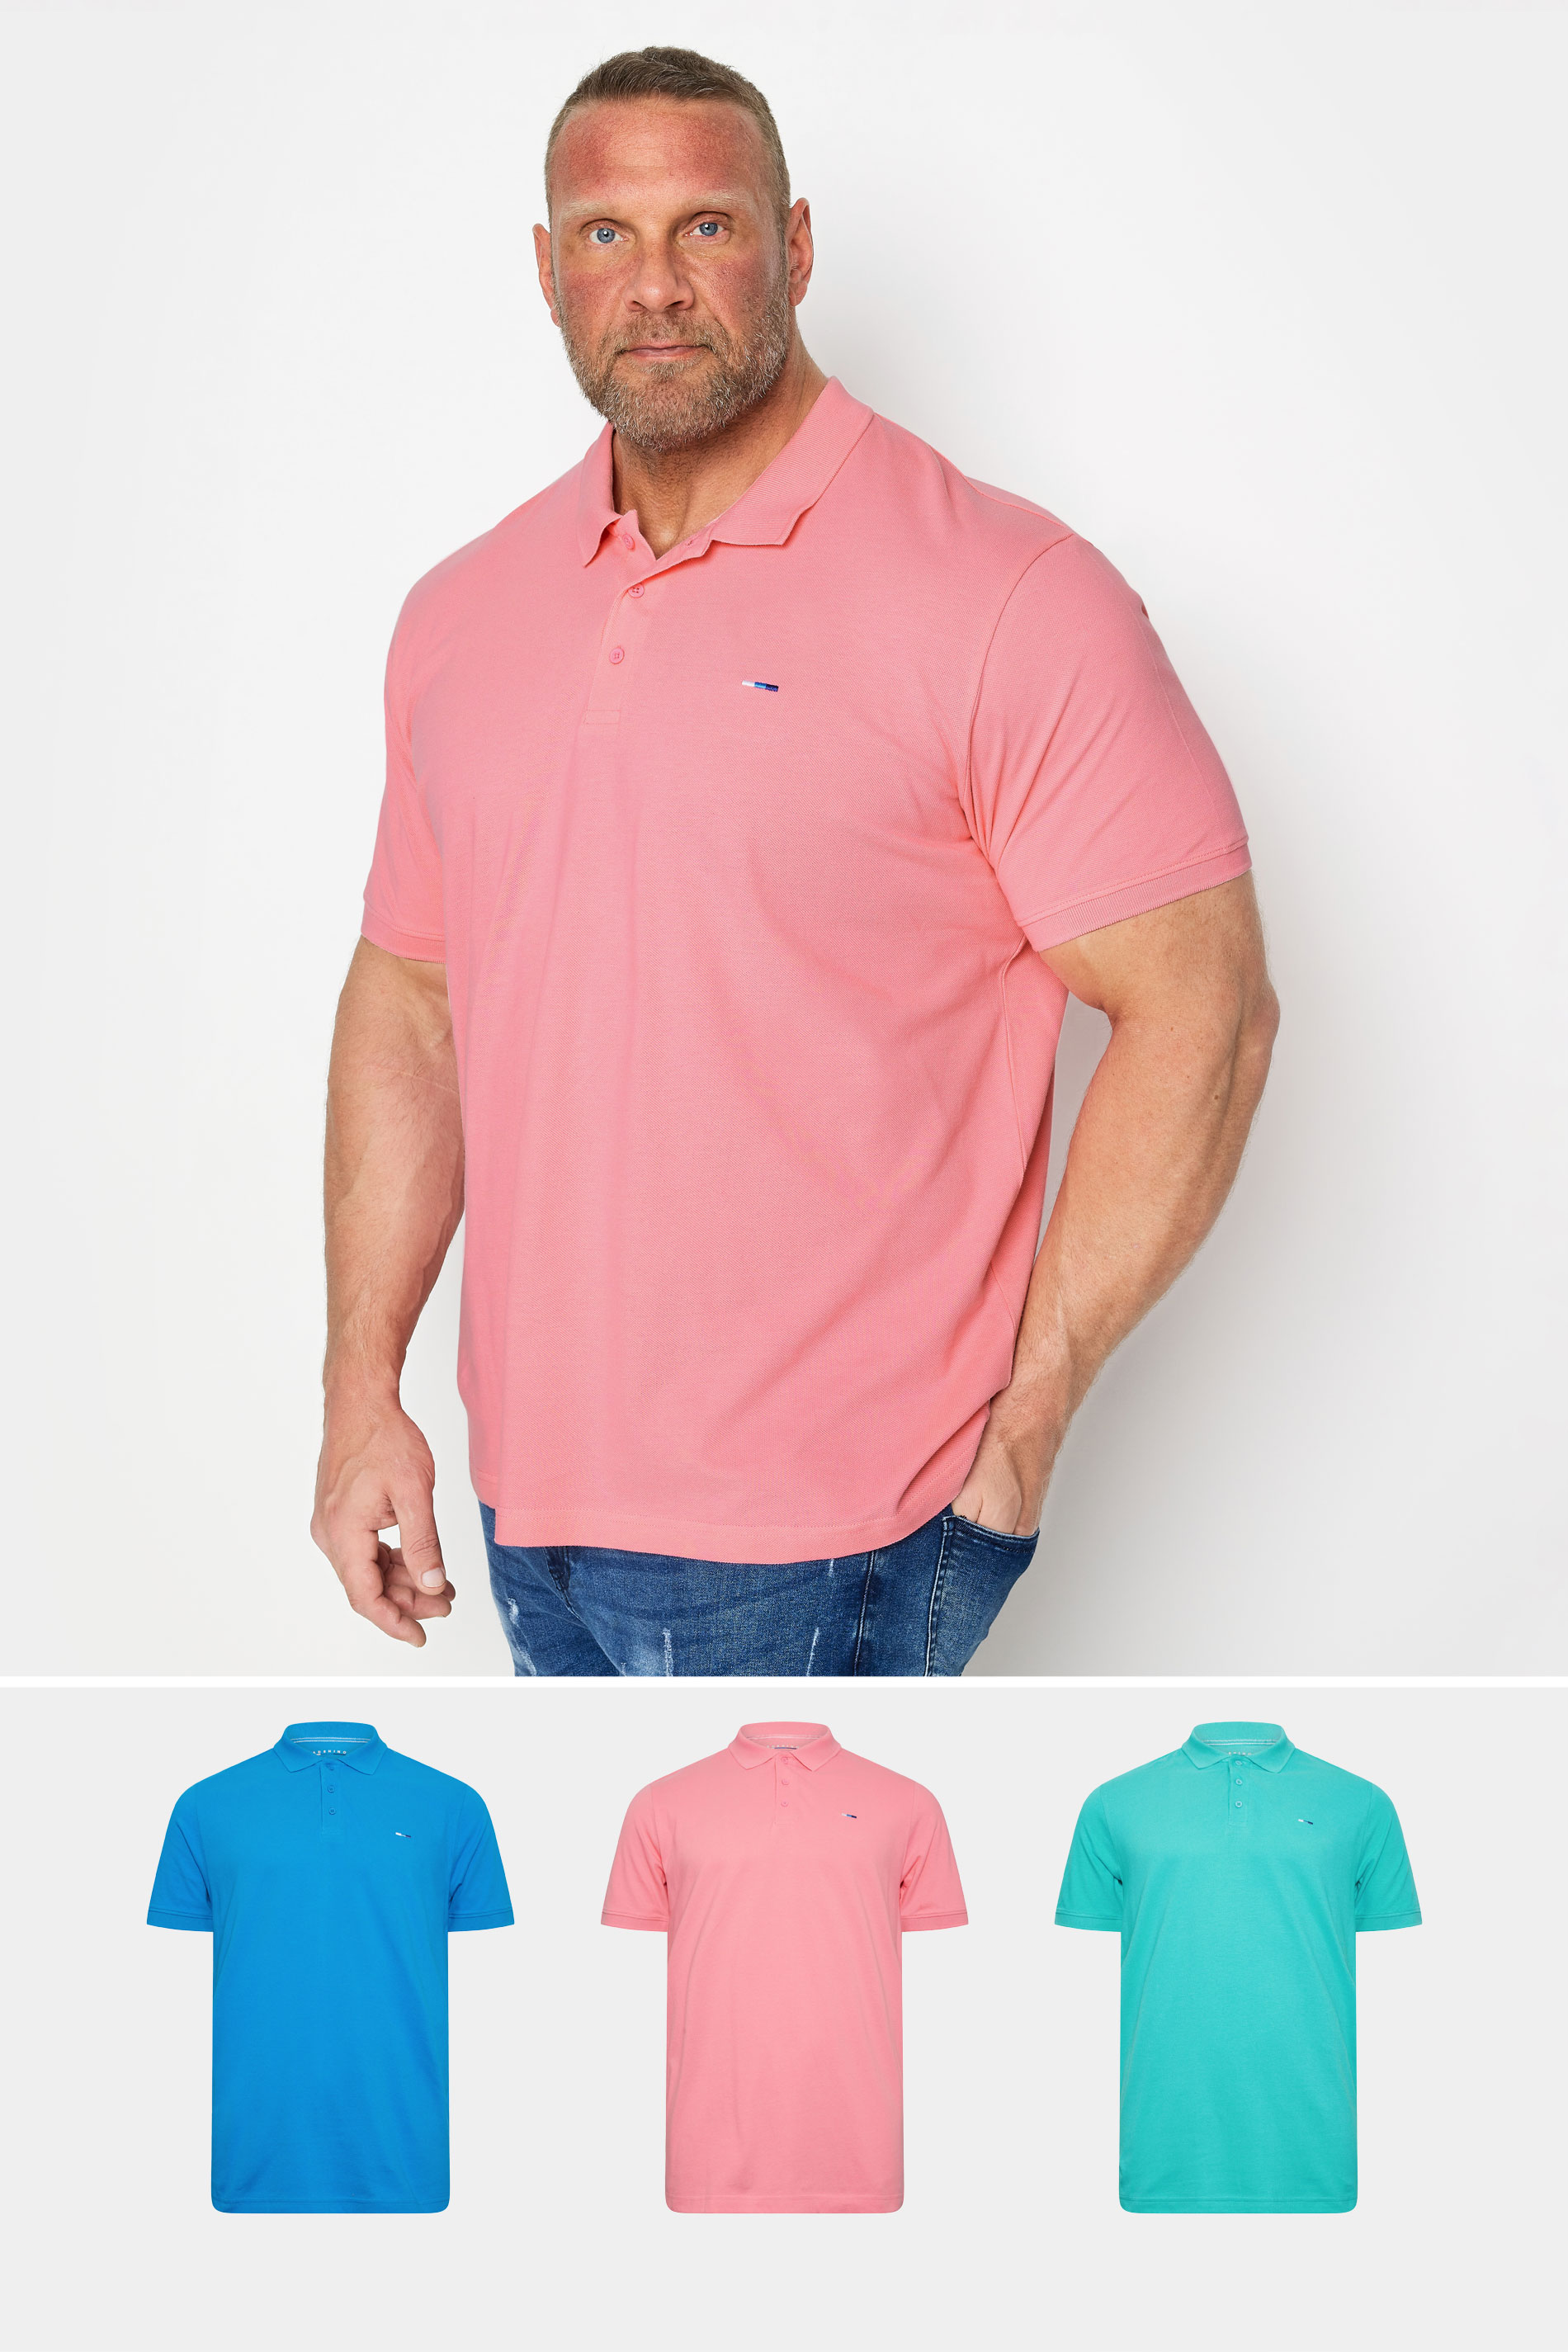 BadRhino Big & Tall 3 PACK Blue/Pink/Teal Polo Shirts | BadRhino 1